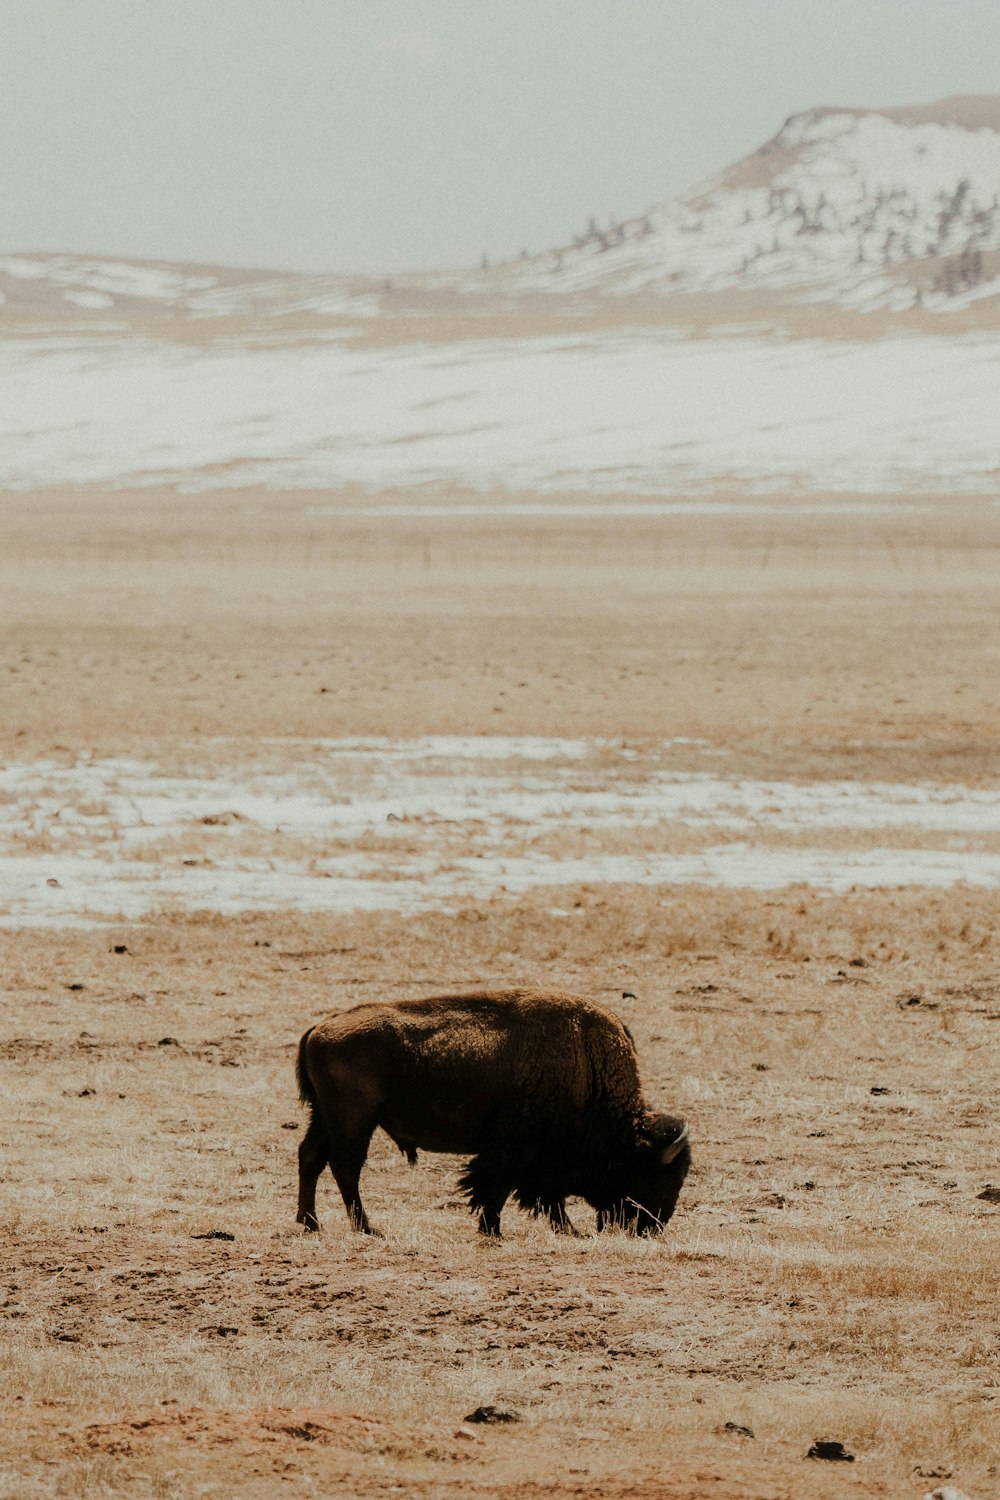 a lone bison grazes in a barren field